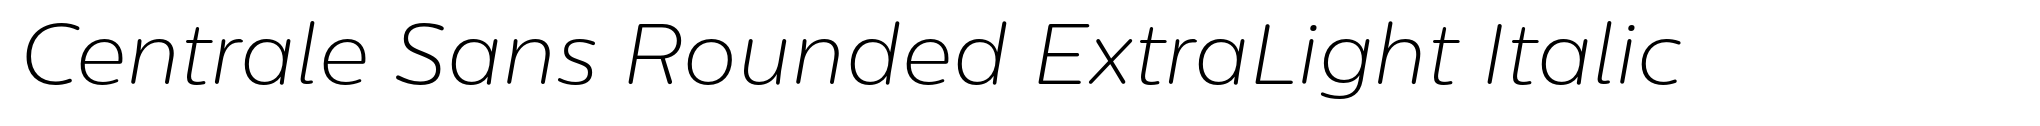 Centrale Sans Rounded ExtraLight Italic image